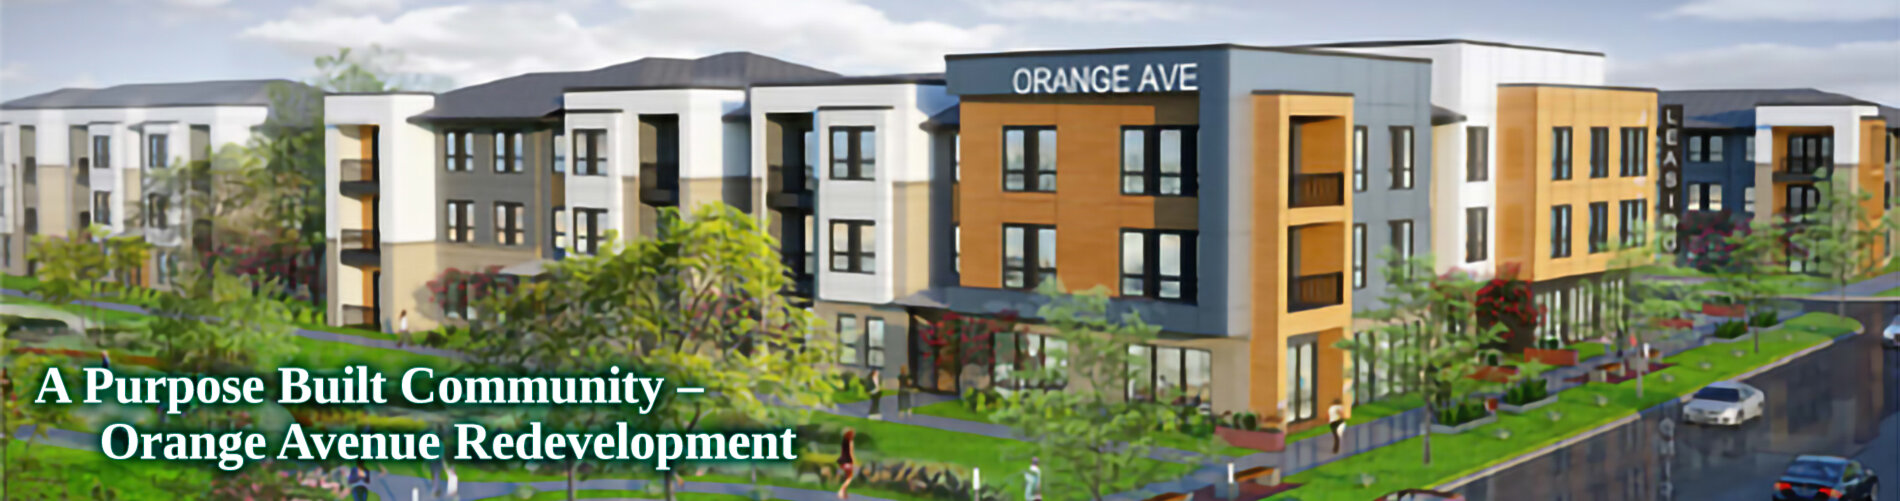 Artist rendering of new Orange Avenue Redevelopment.